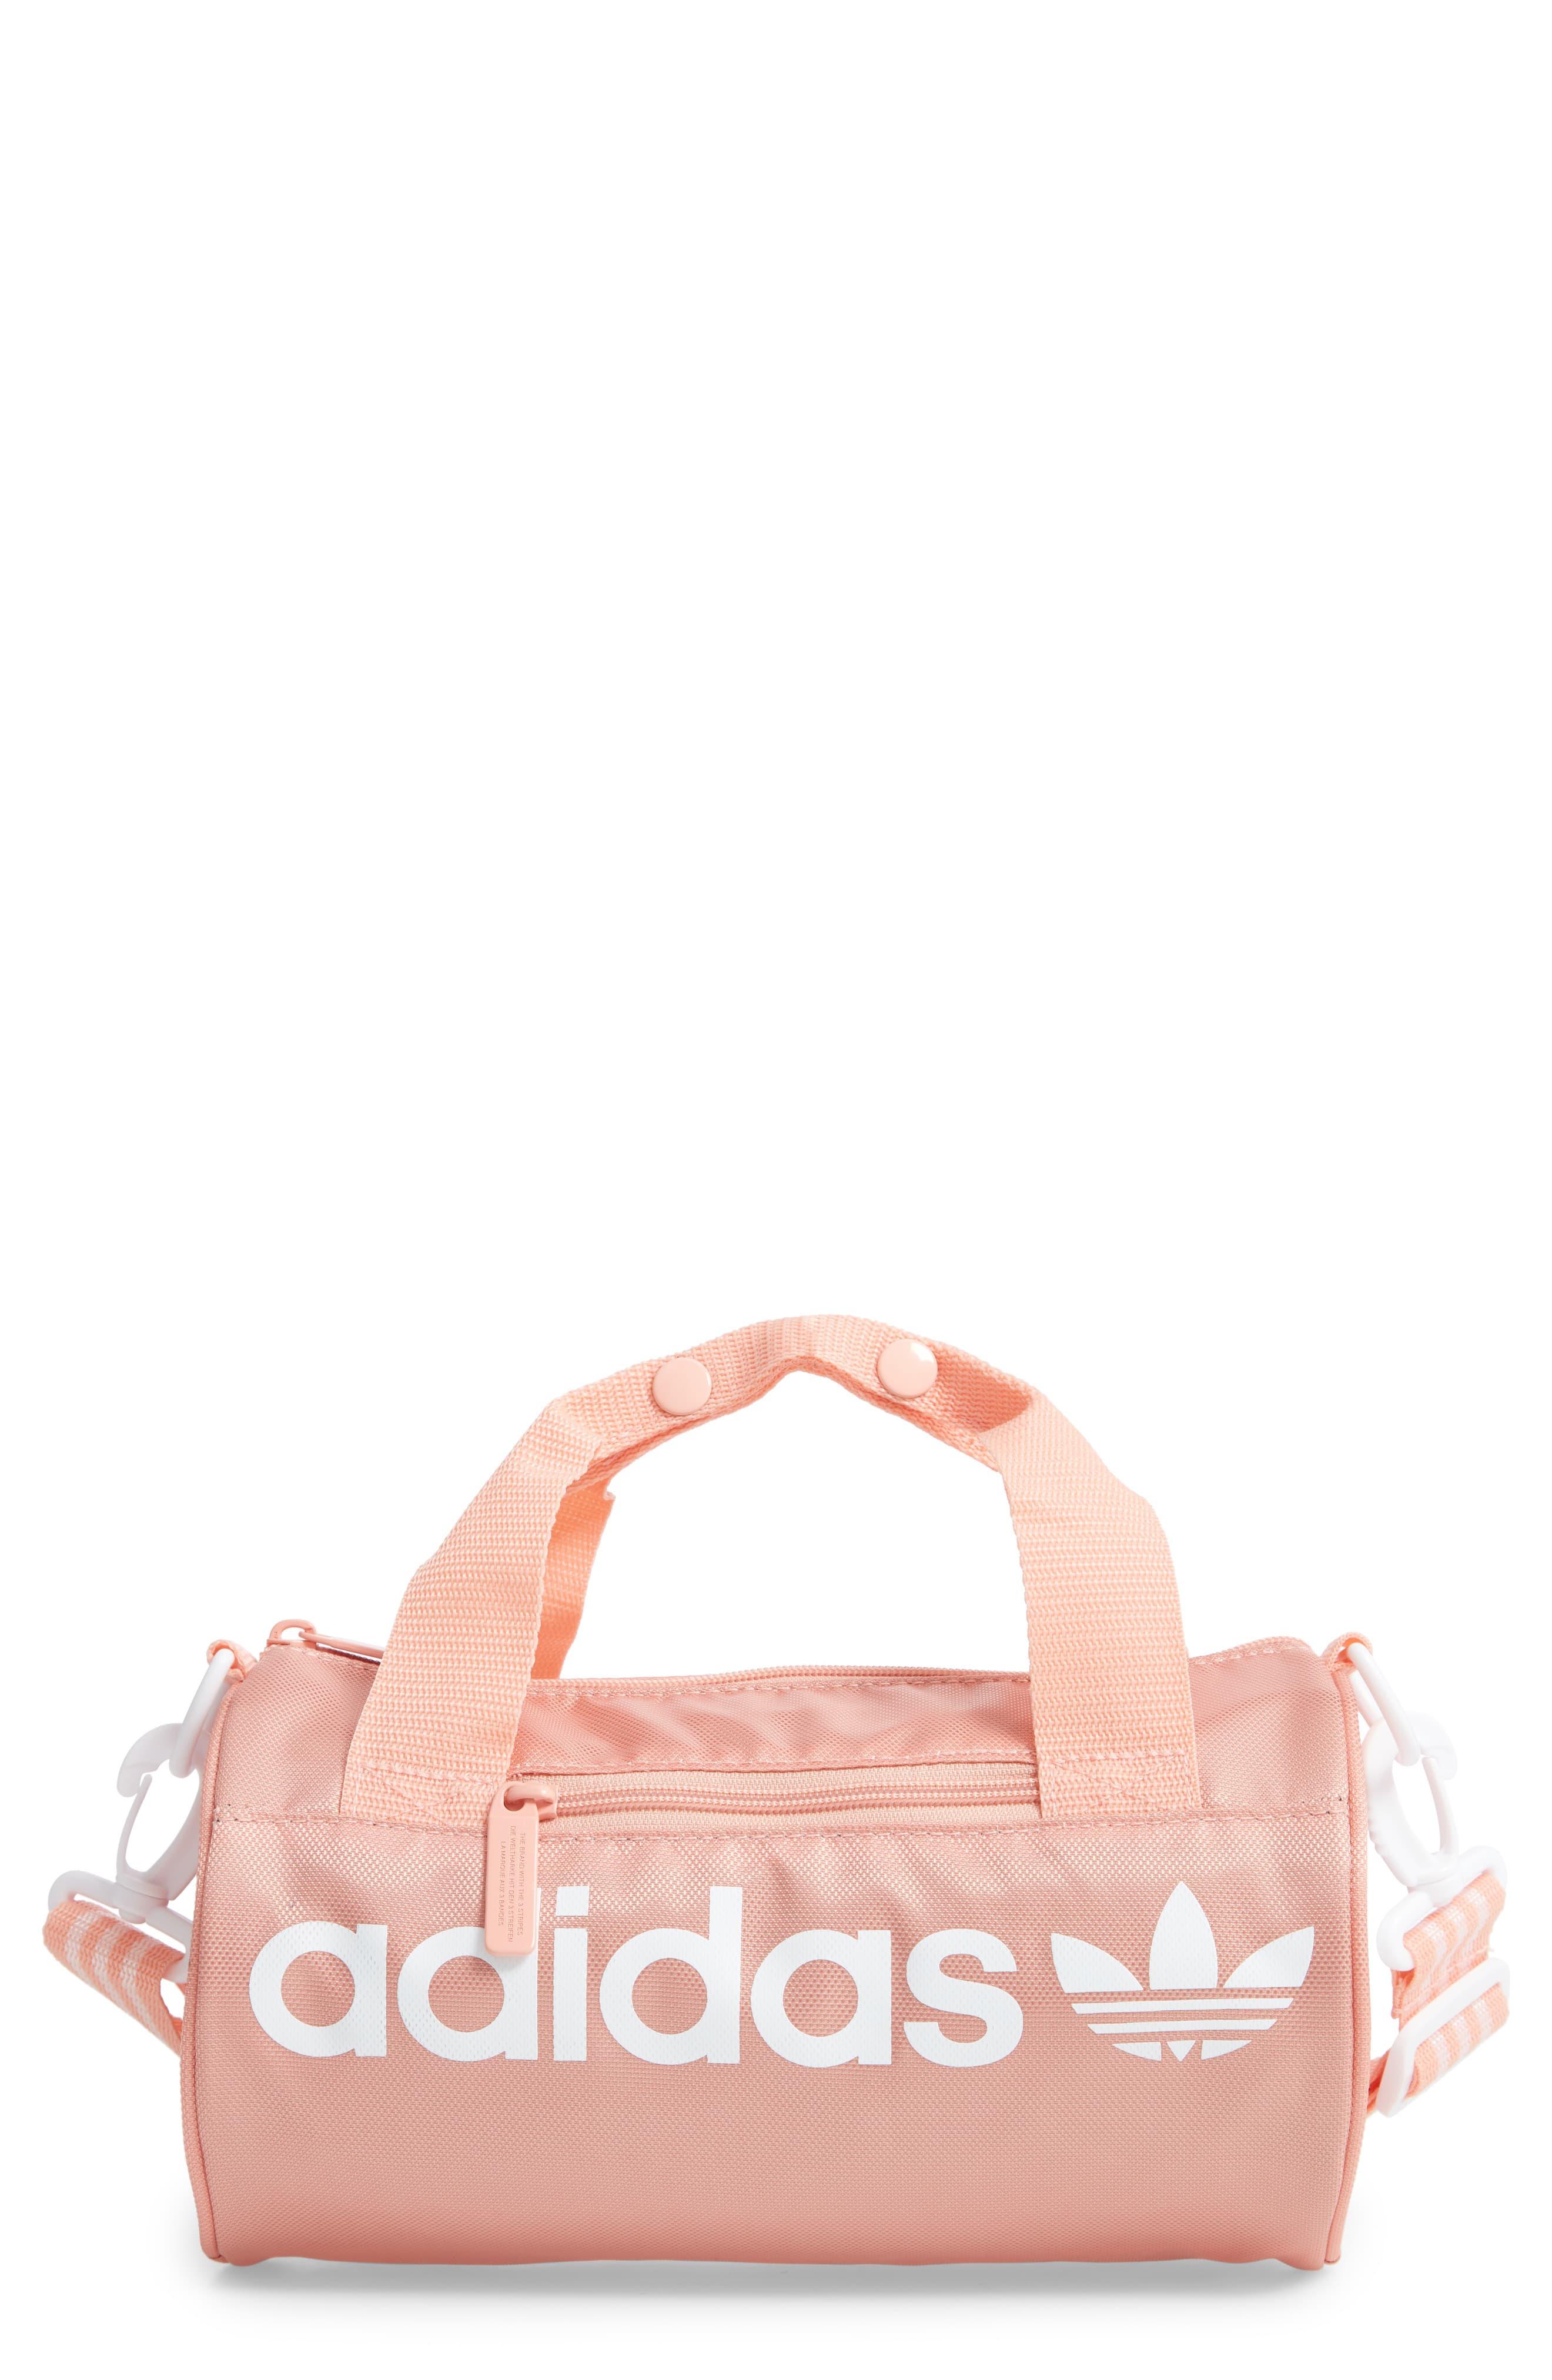 adidas Originals Santiago Mini Duffle Bag in Pink - Lyst